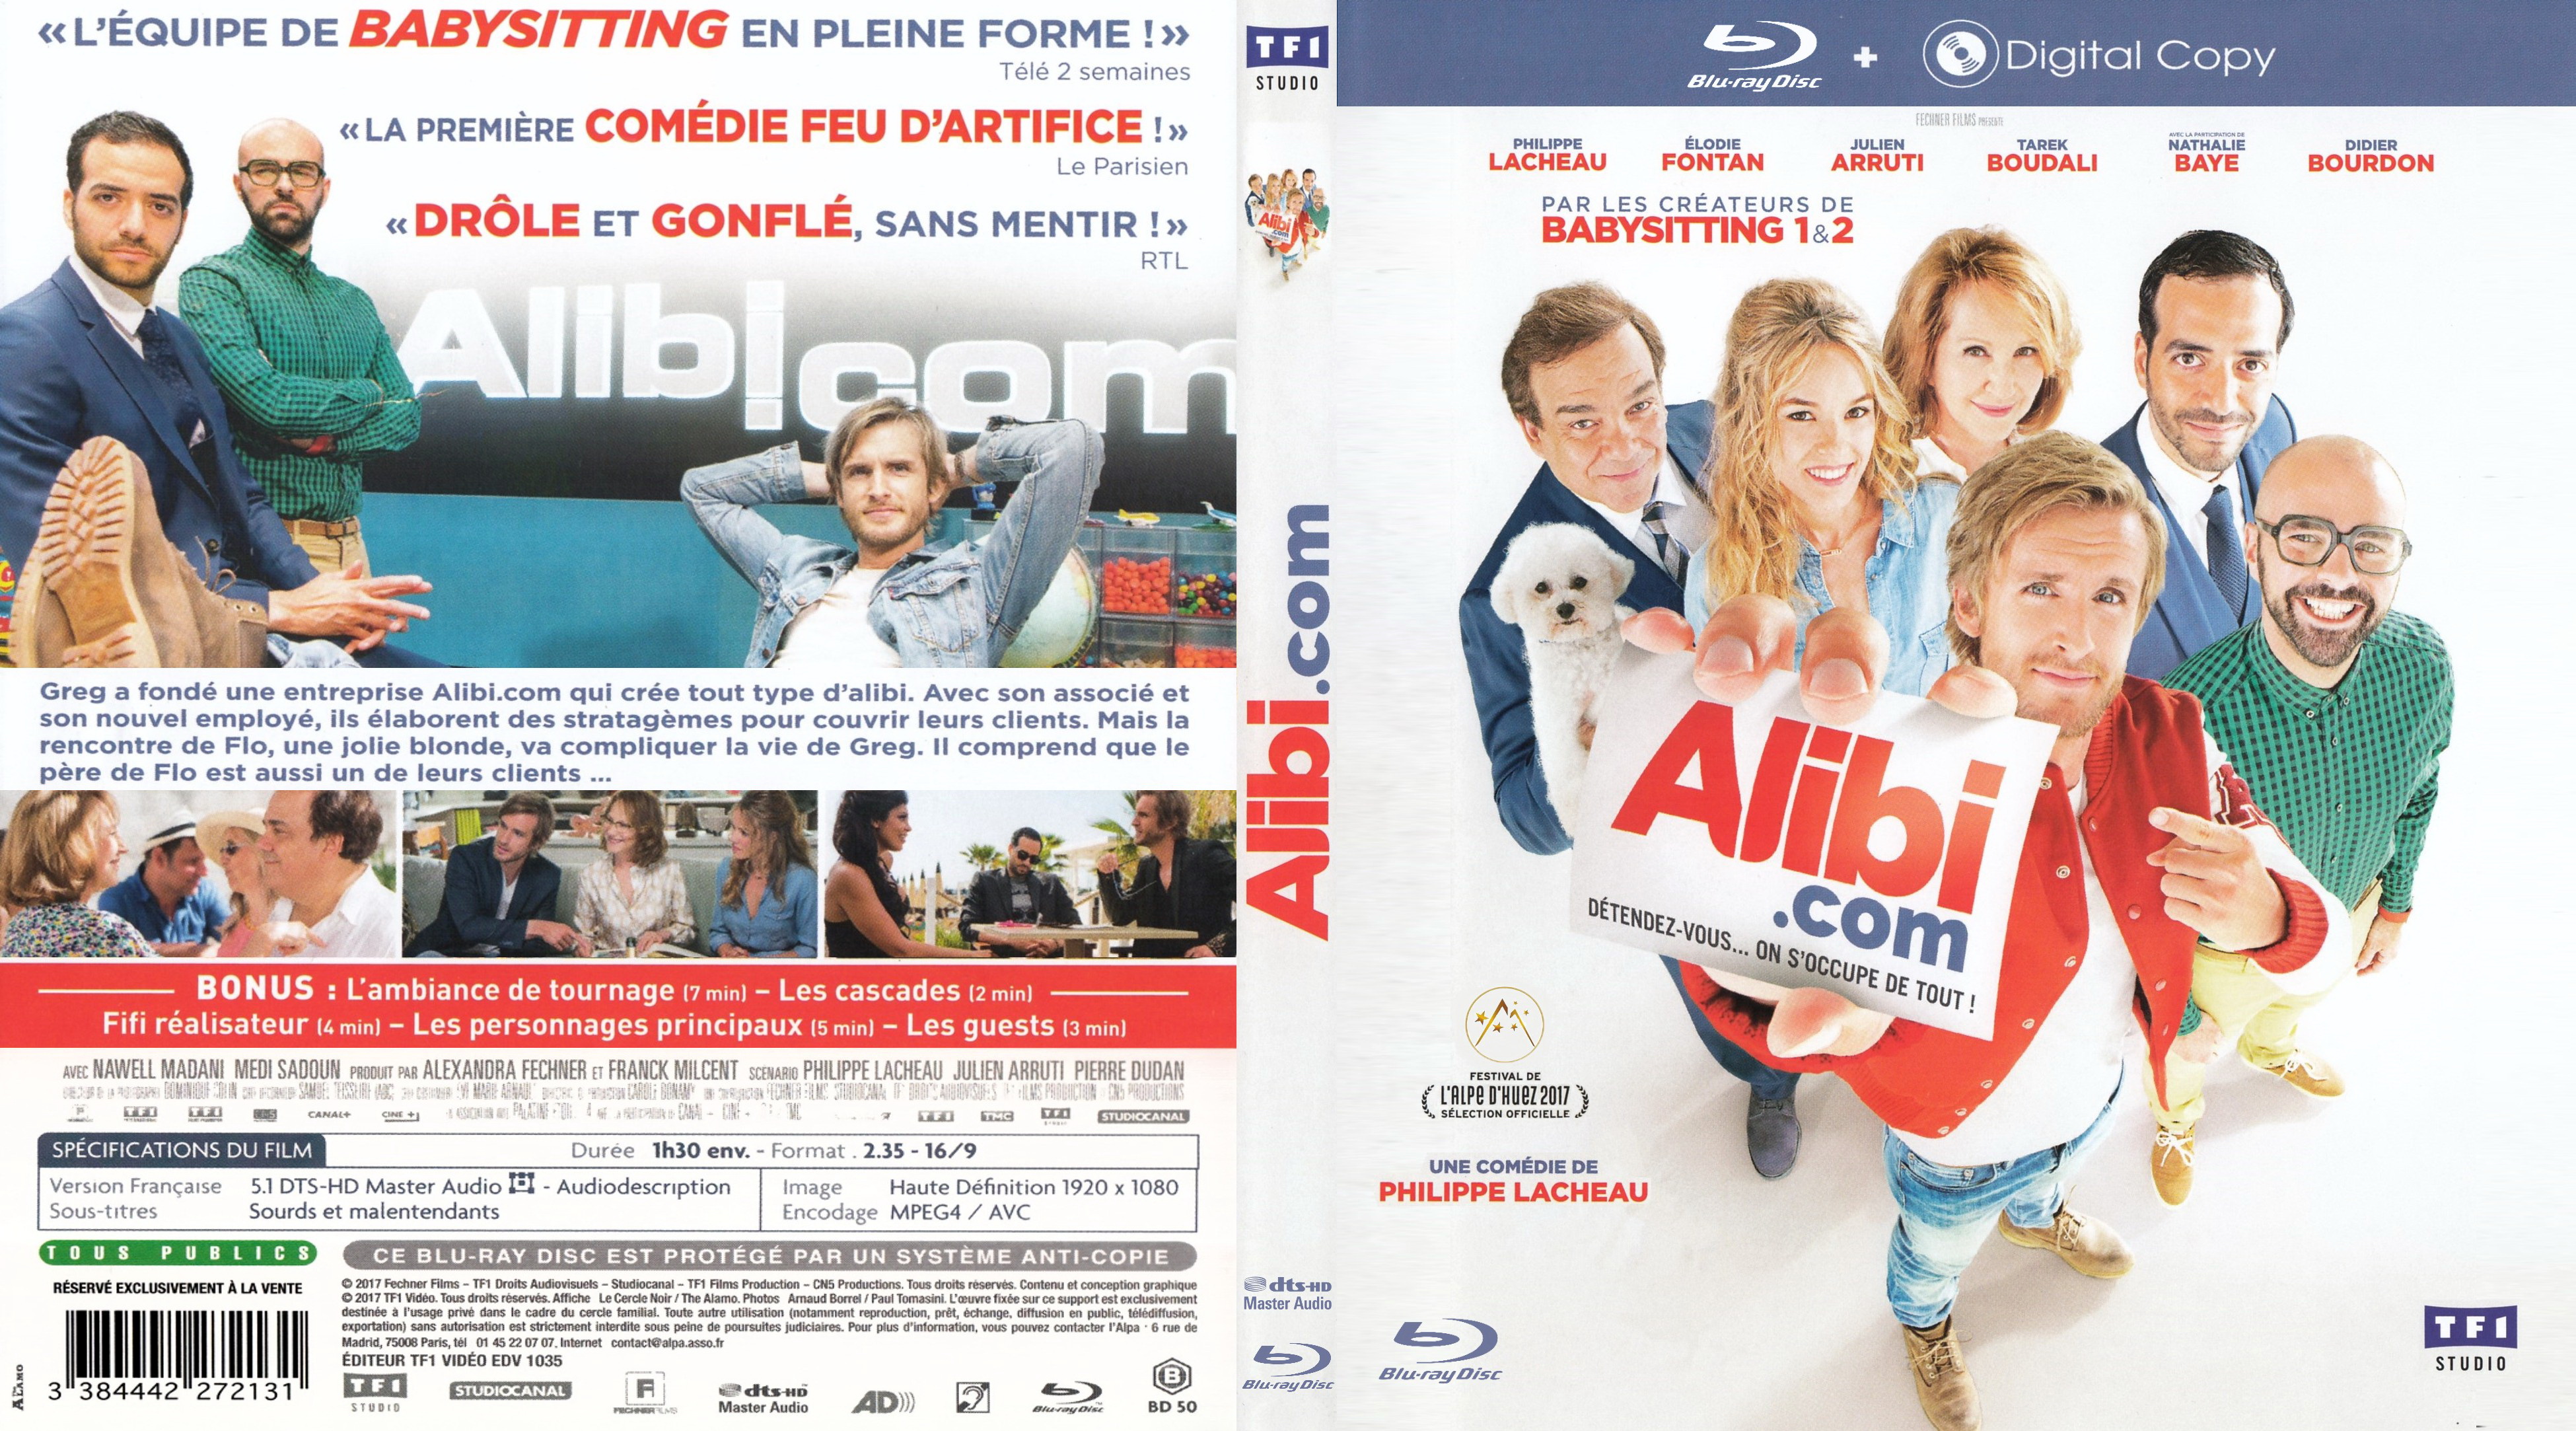 Jaquette DVD Alibi.com (BLU-RAY)